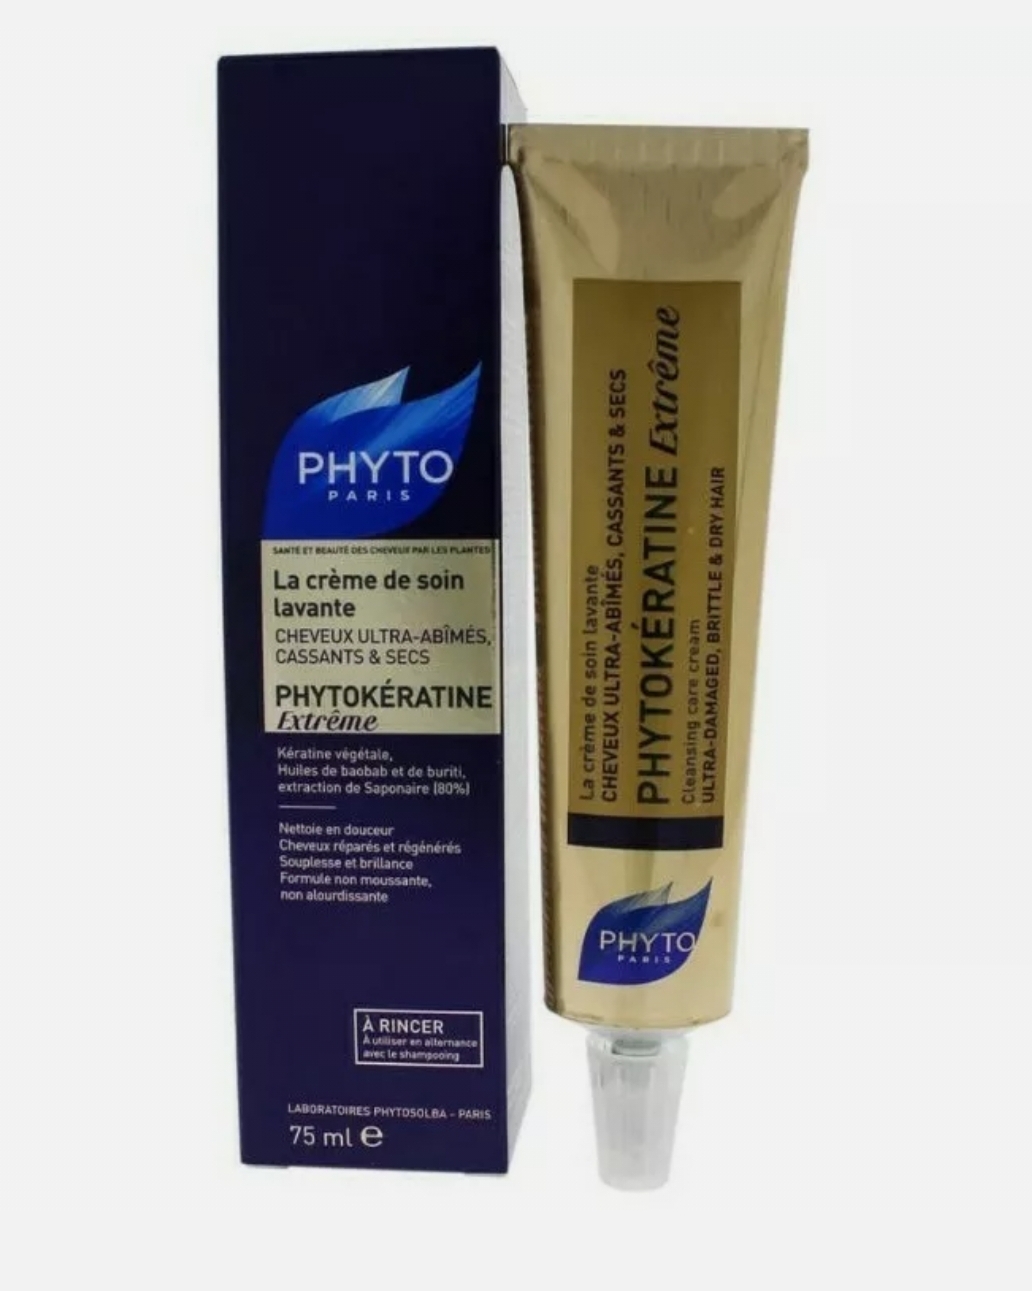 Phyto Paris Cleansing Hair Care Cream 30ml